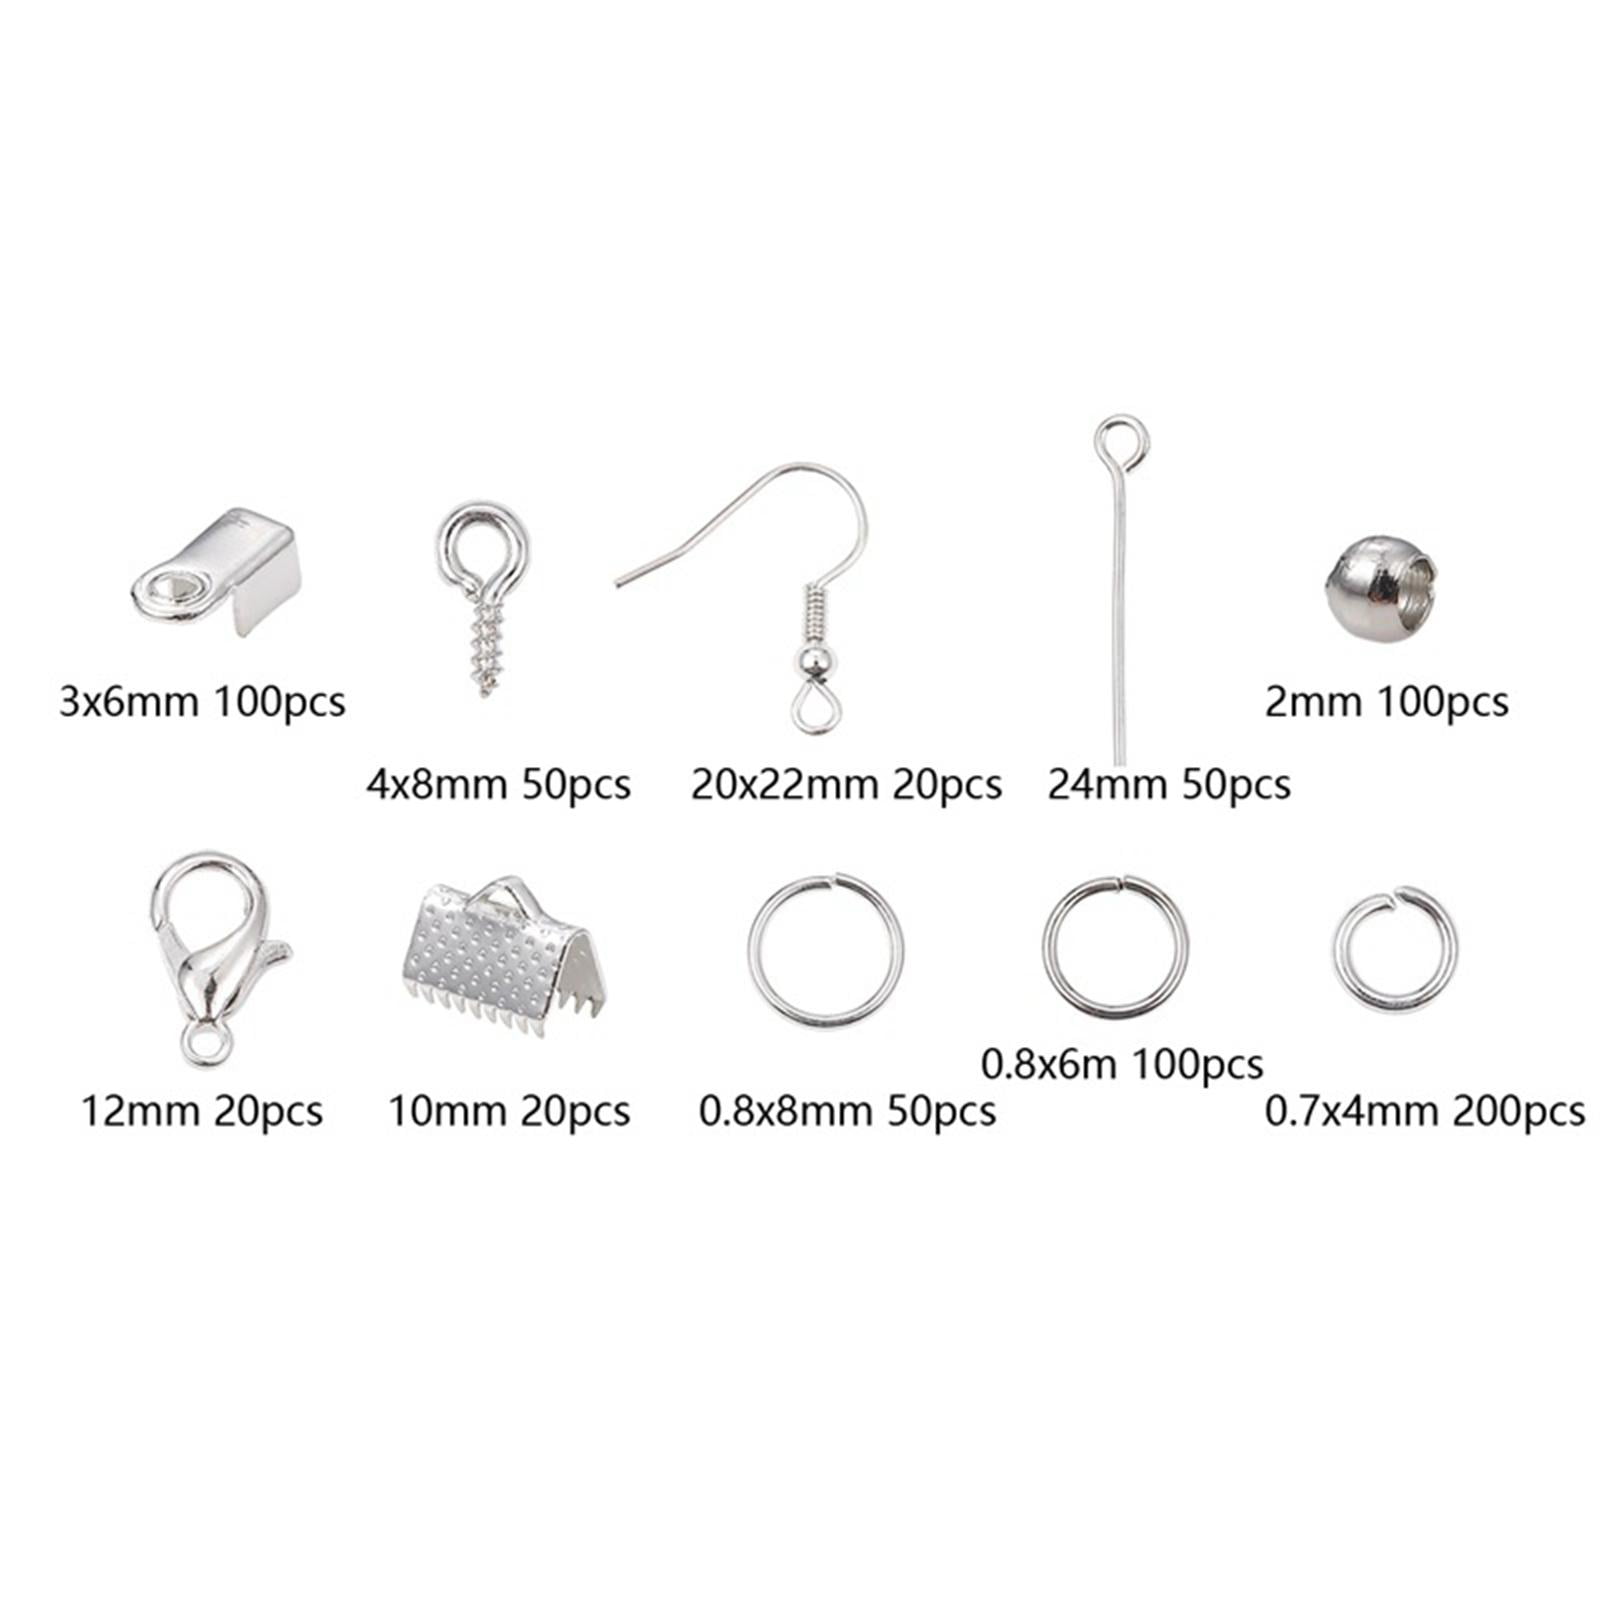 GENEMA Earring Making Supplies Kit 2418pcs Earring Repair Parts Earring  Hooks Backs Jump Rings Earrings Studs Jewelry Making 